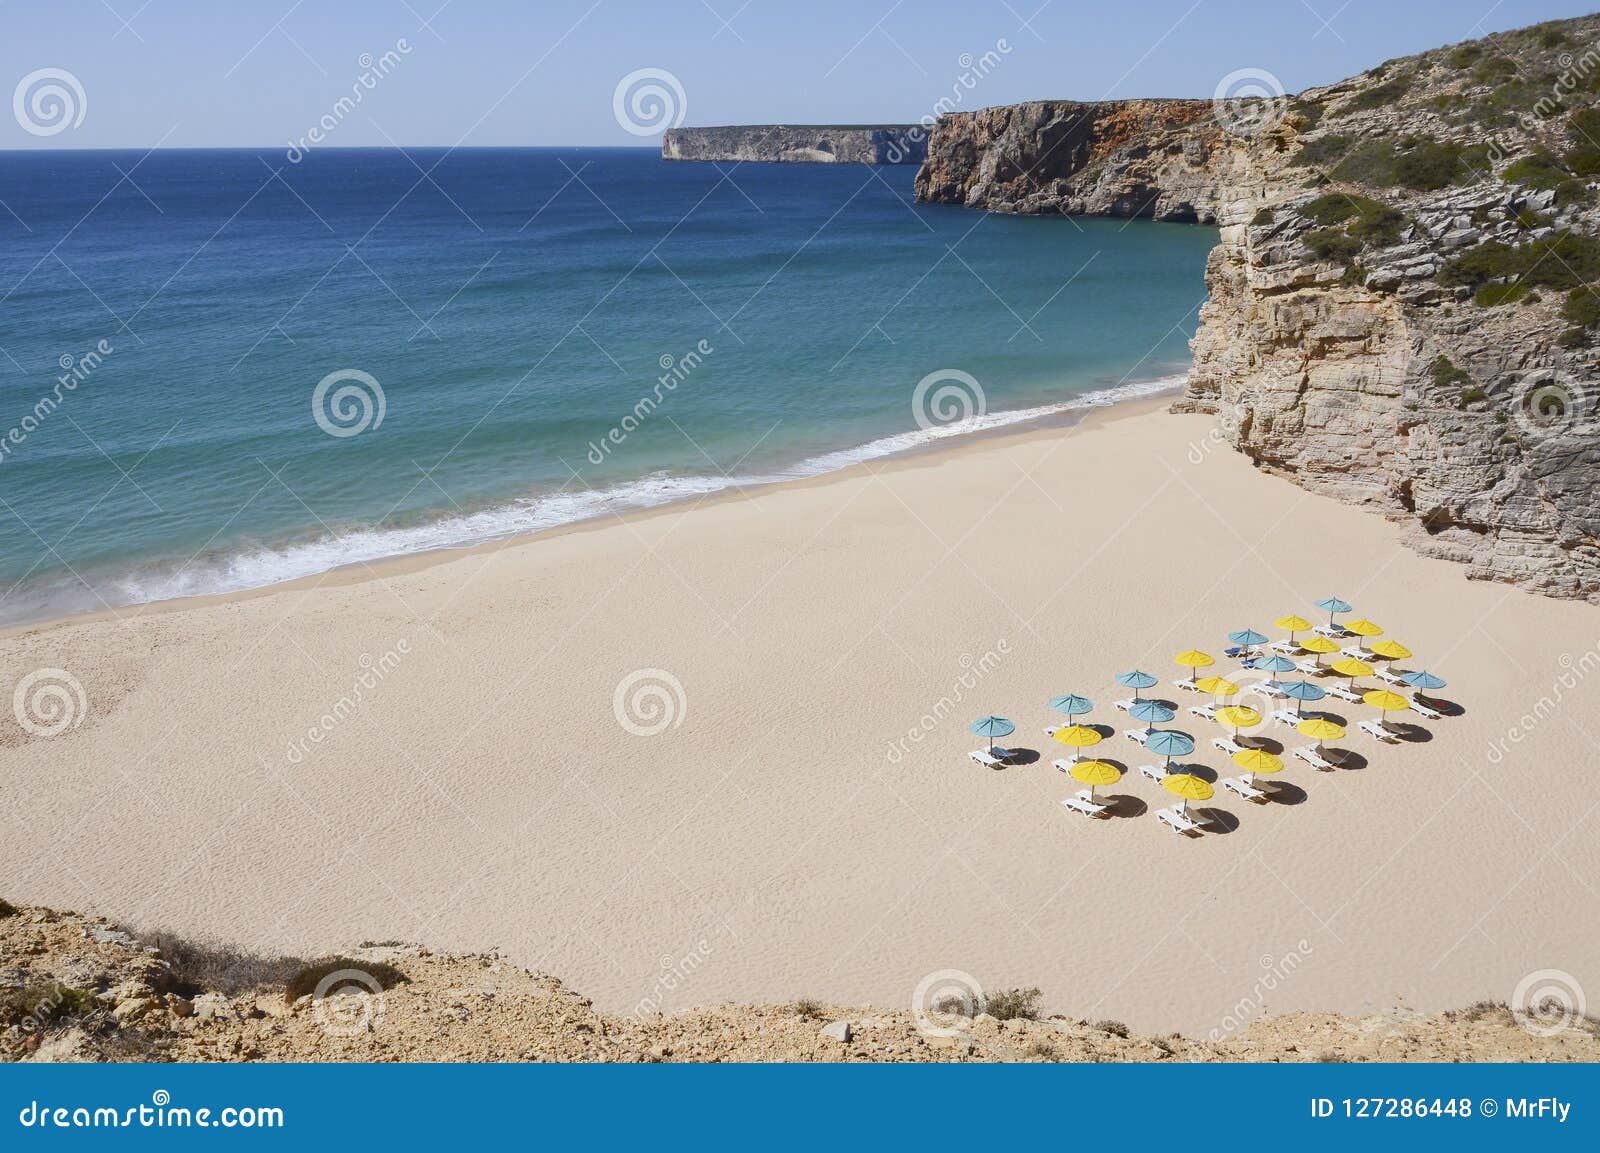 sunbeds on a bautiful beach in algarve, portugal